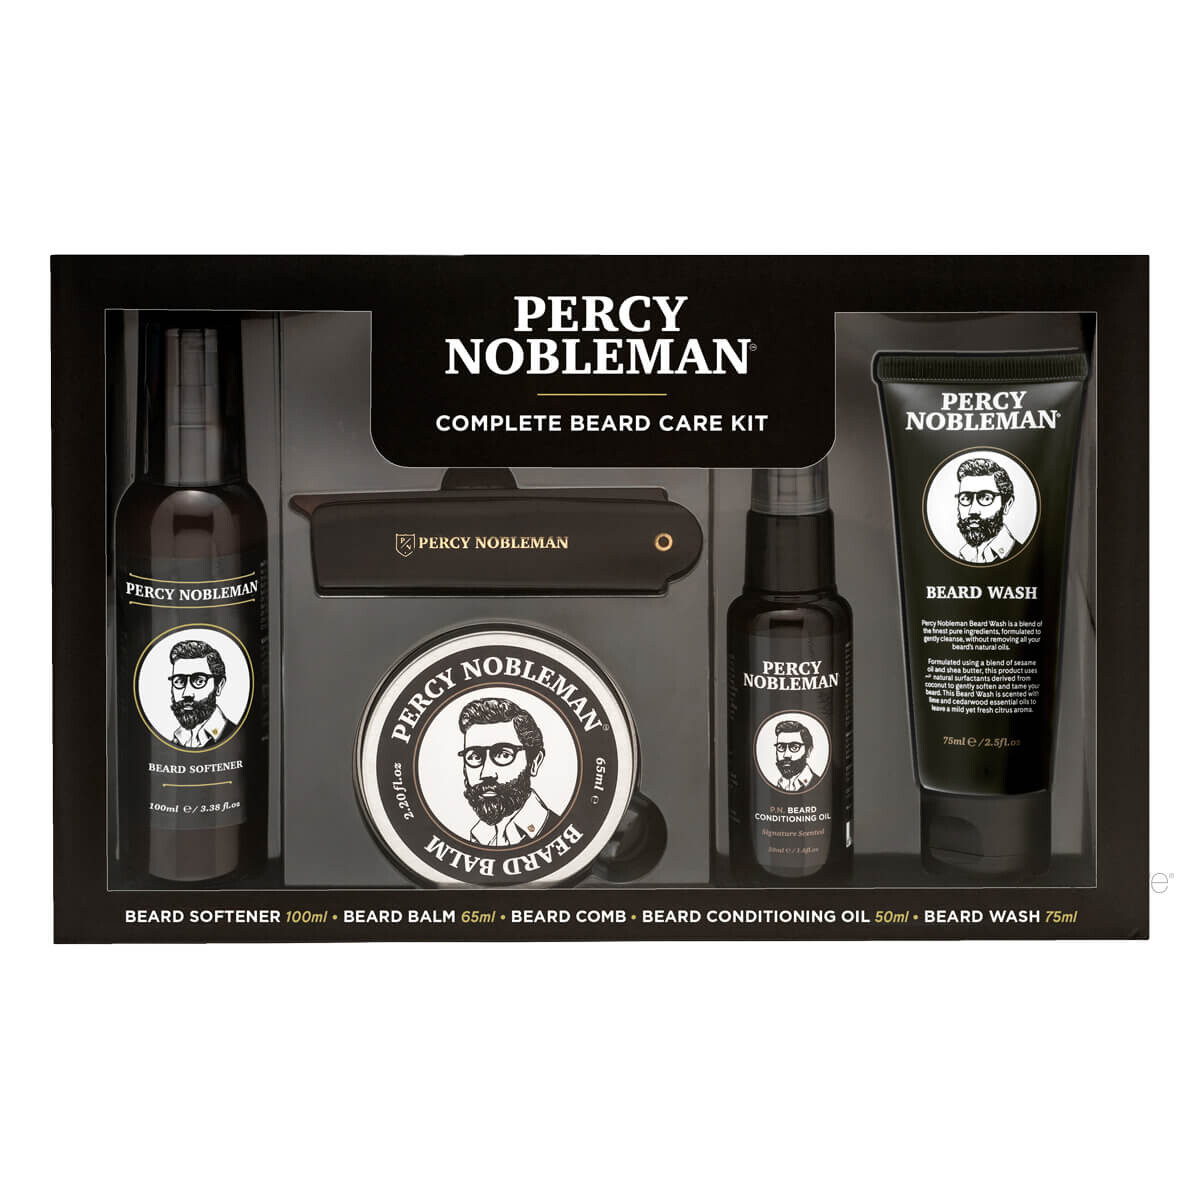 Se Percy Nobleman Complete Beard Care Kit hos Proshave